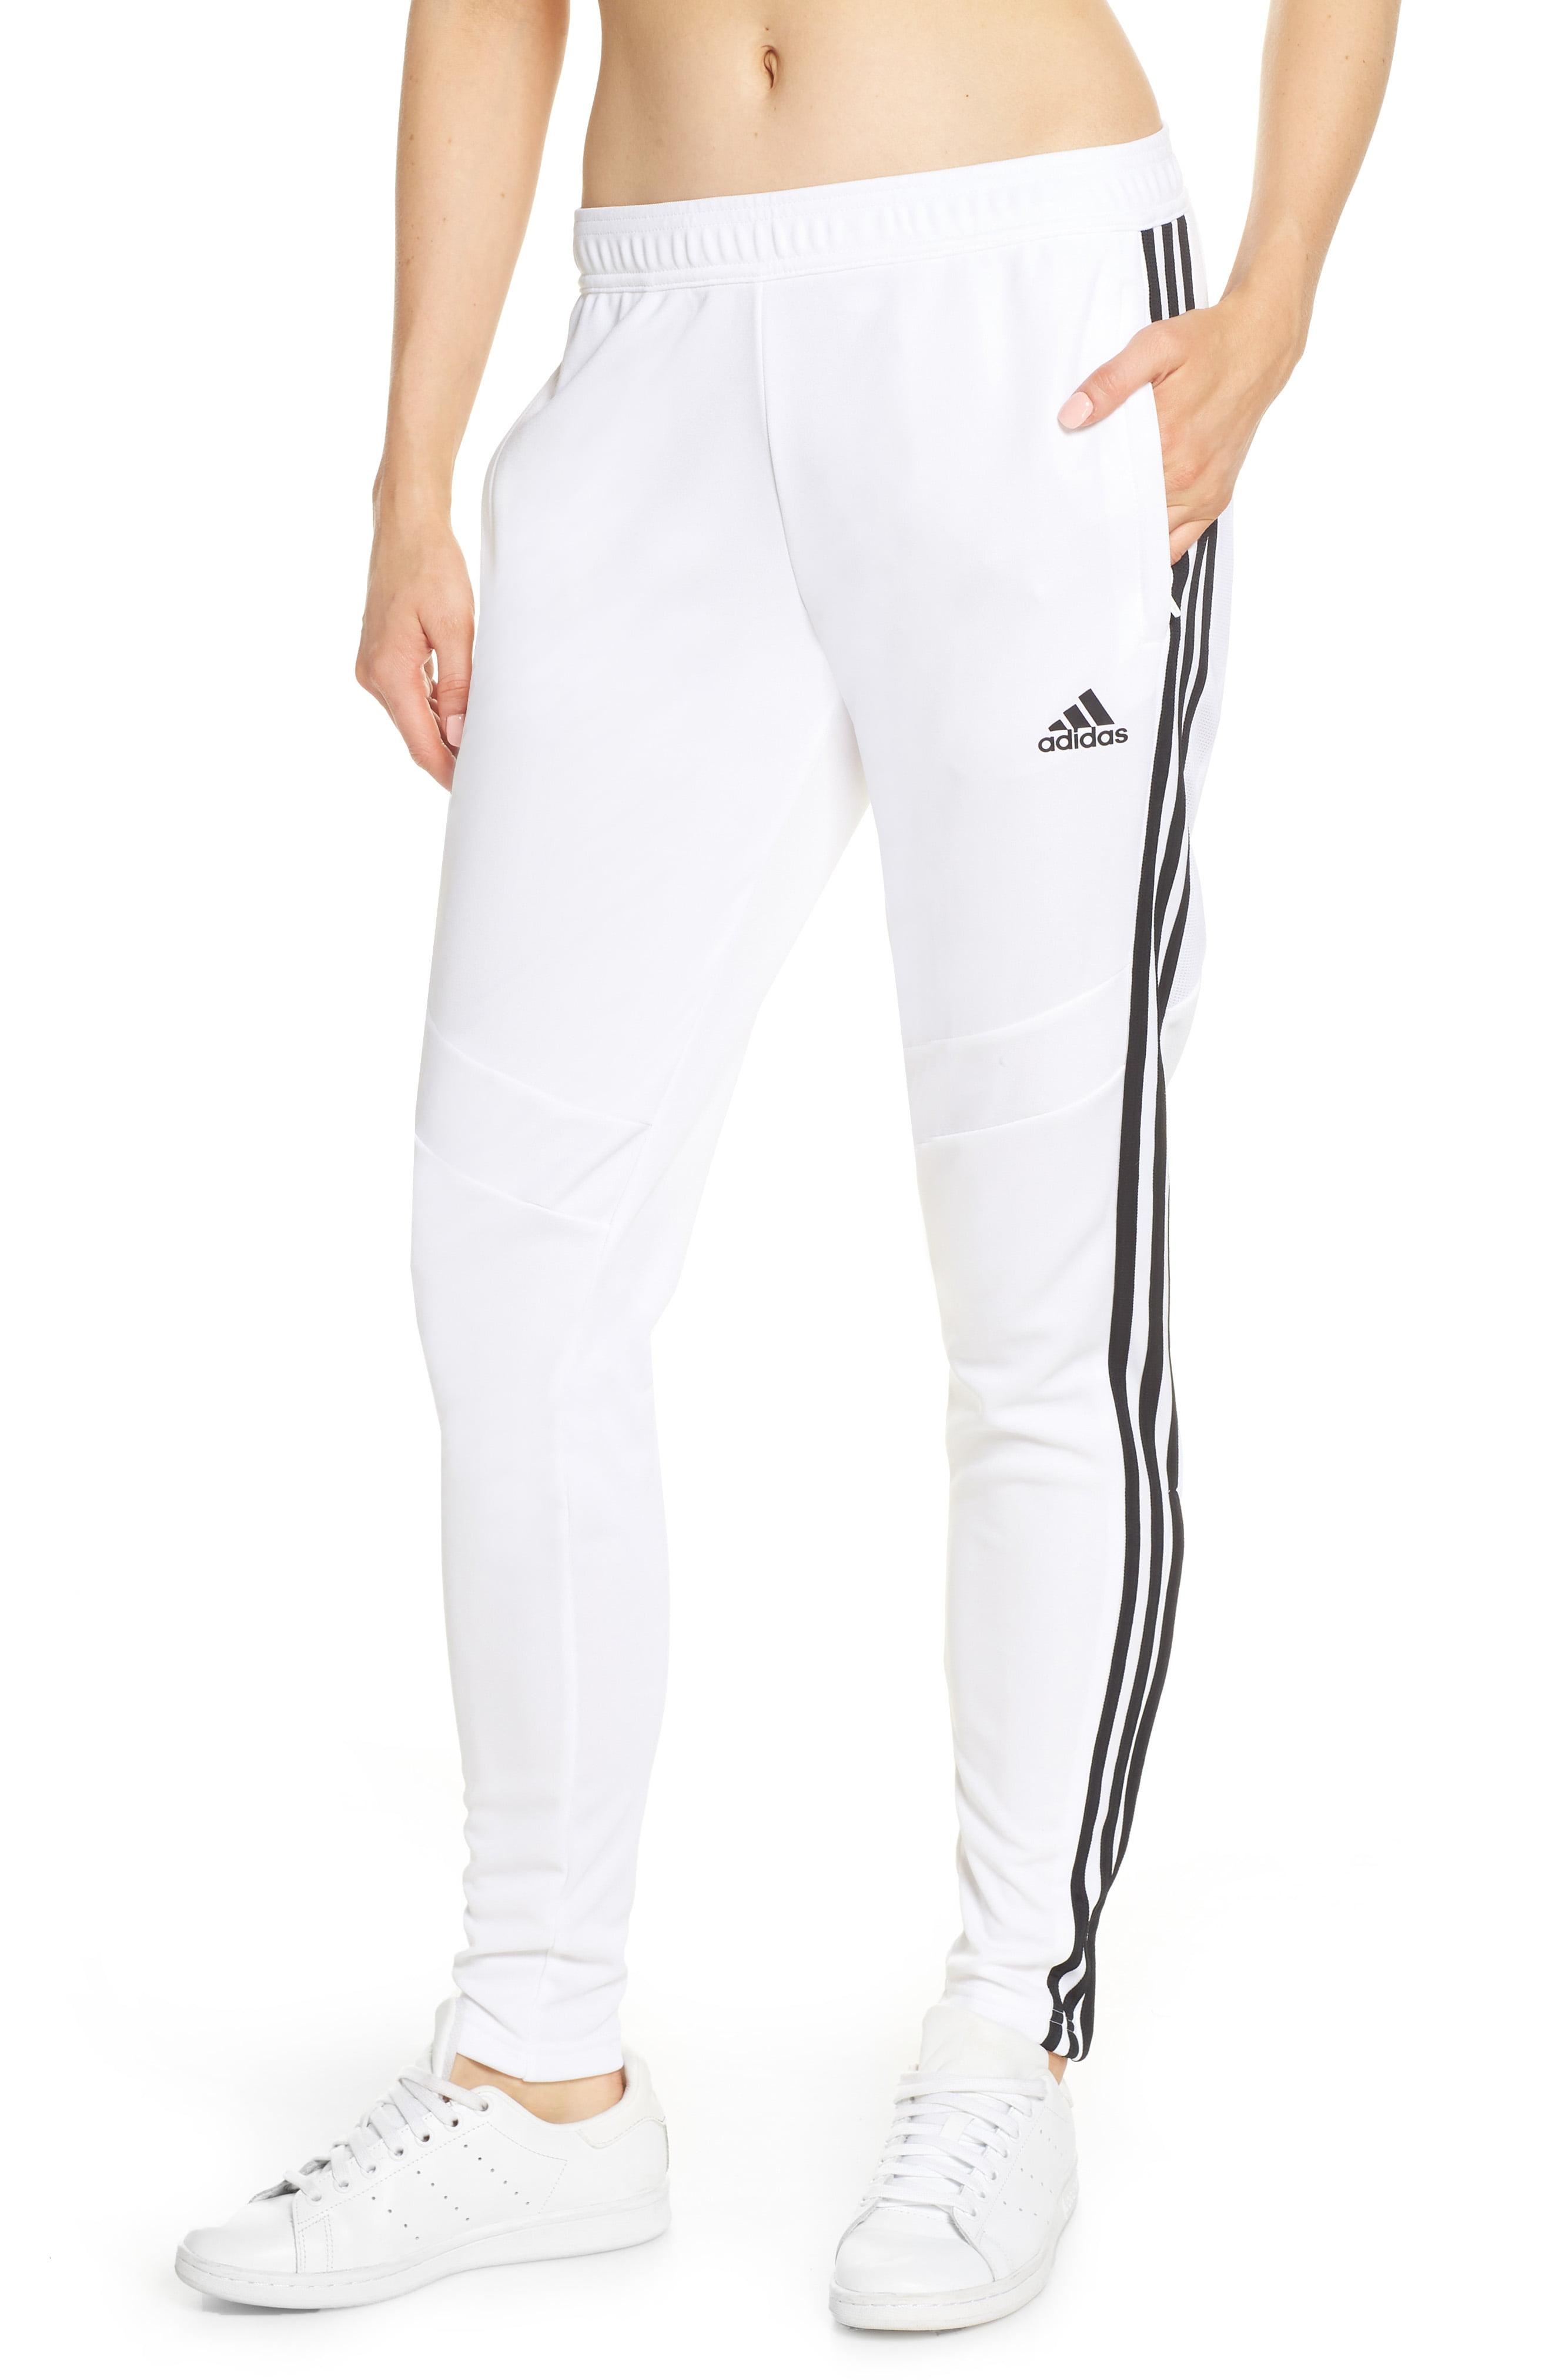 Lyst - adidas Tiro 19 Training Pants in White